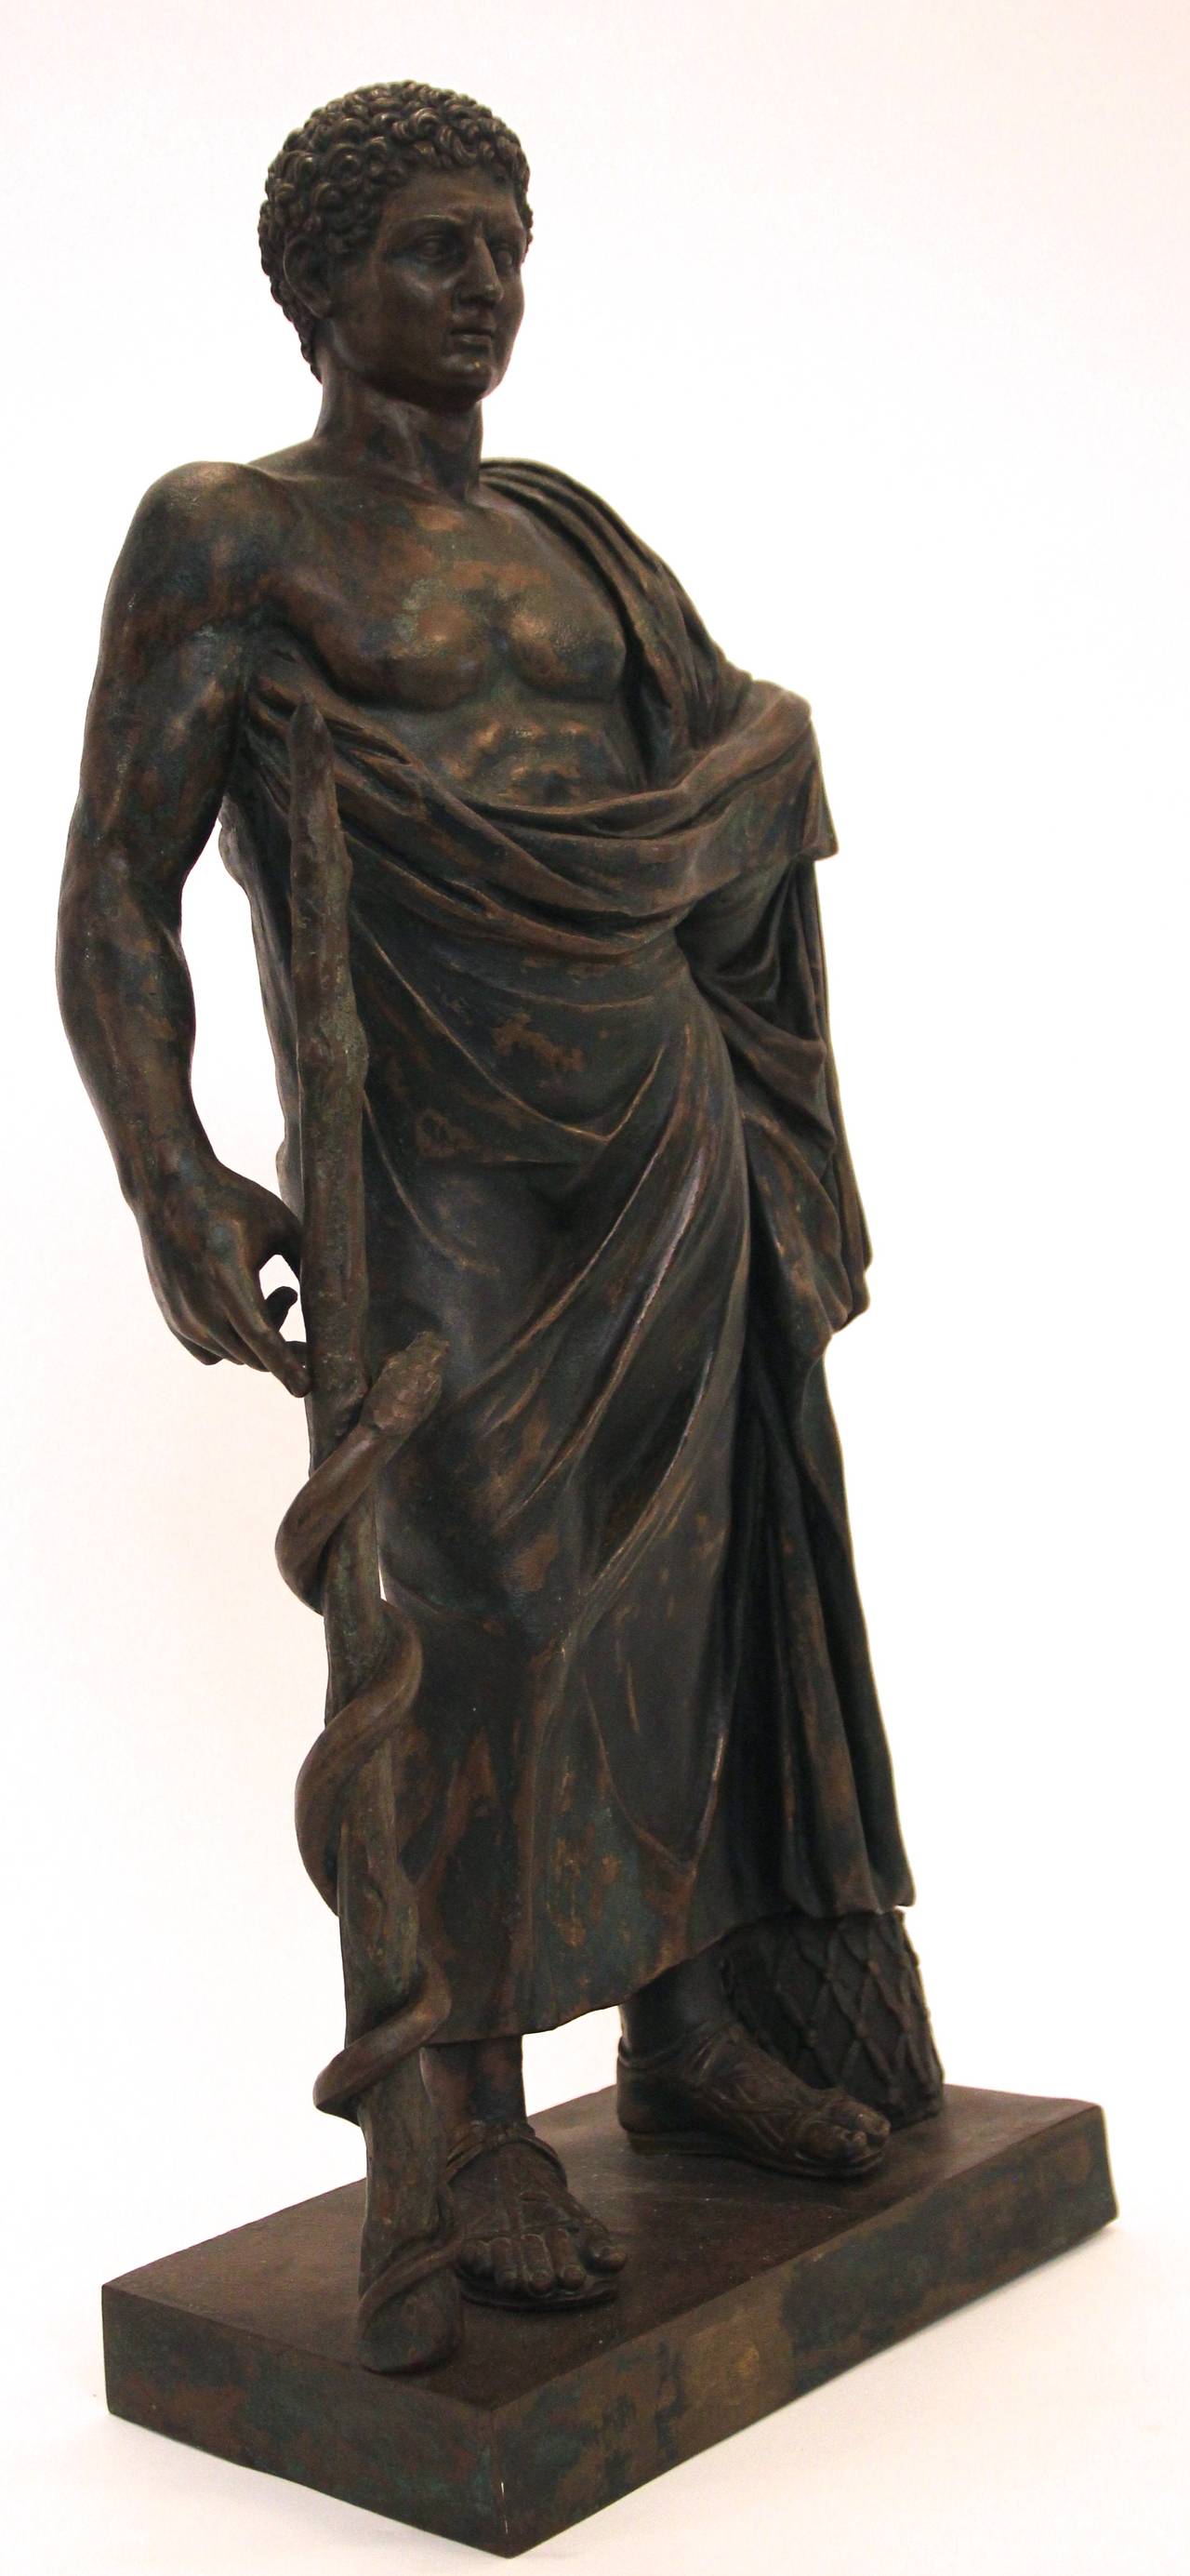 Esculape bronze statue,
signed: Fonderia Sommer, Napoli,
Grand Tour, circa 1900, Italy.
Measures: Height 68 cm, width 28 cm, depth 16 cm.